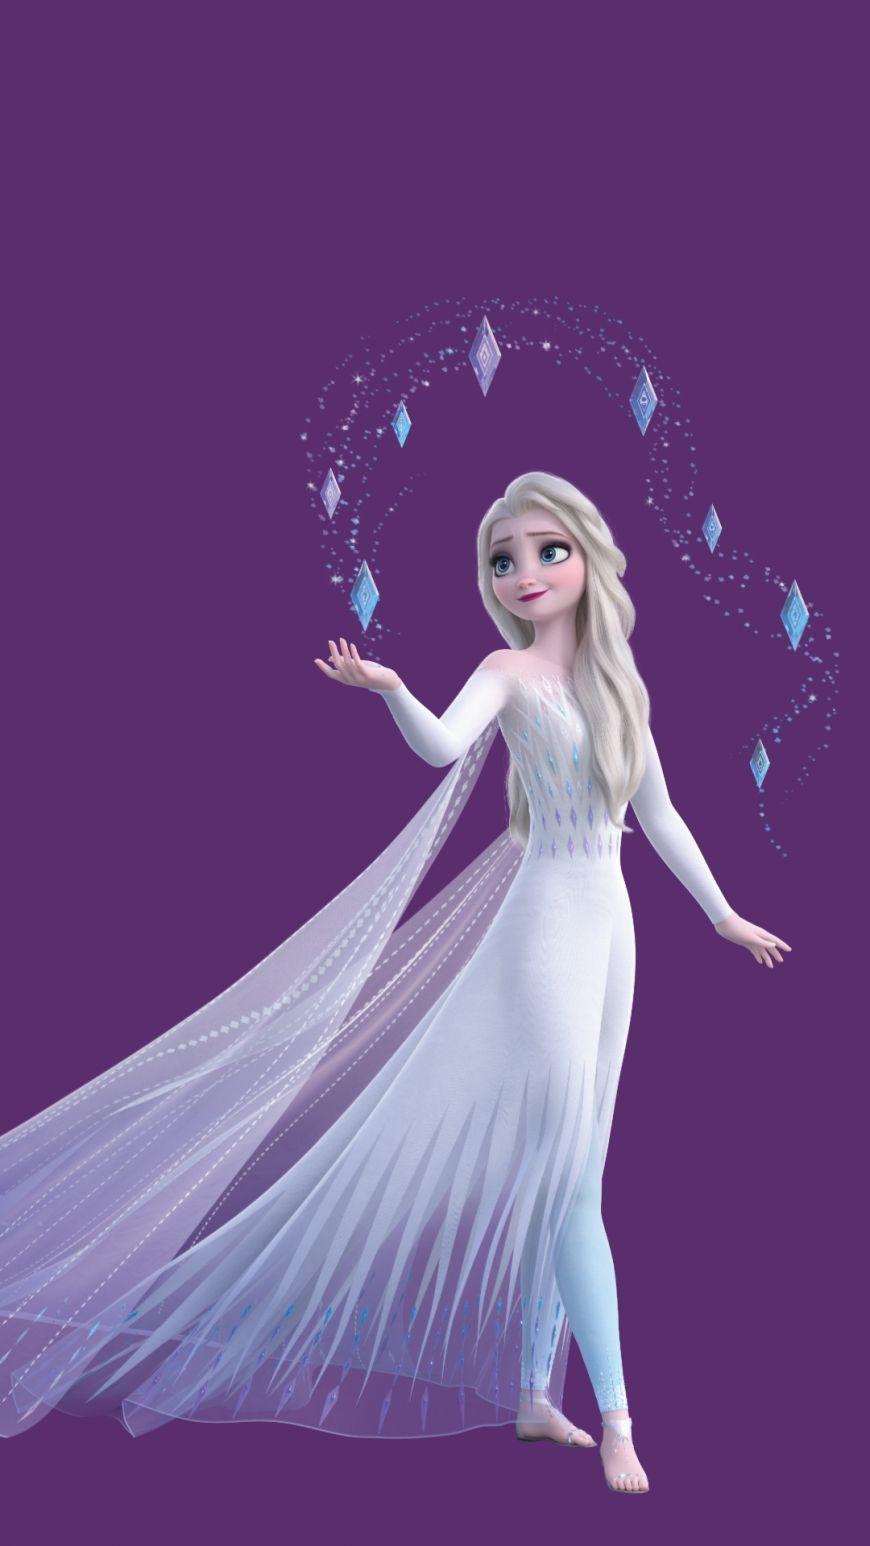 Frozen 2 Elsa White Dress Wallpapers - Top Những Hình Ảnh Đẹp